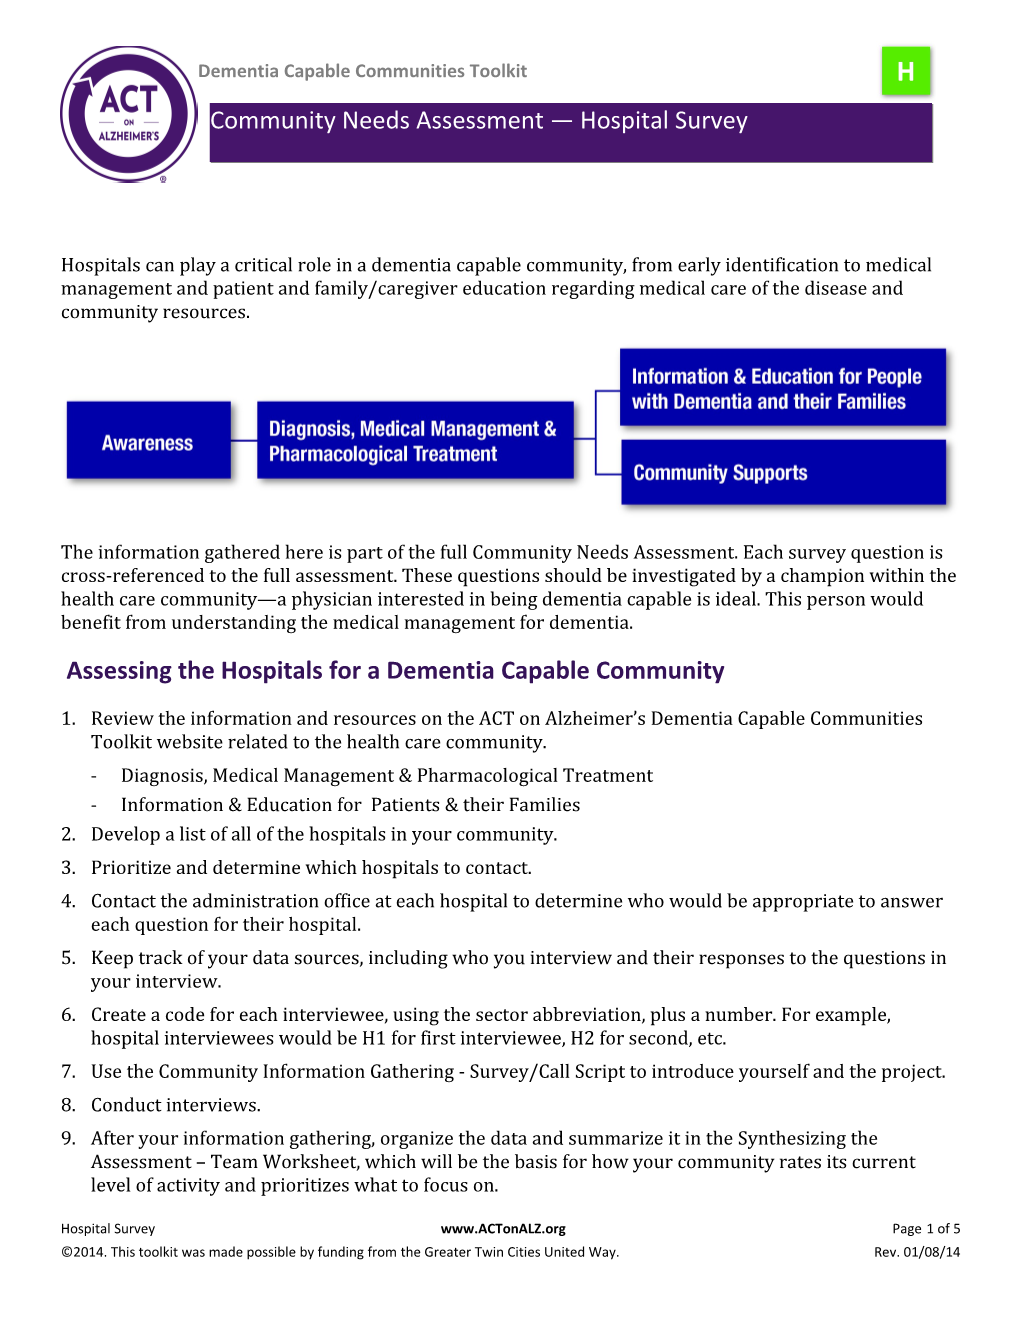 Assess Hospital Dementia Capable Communities Toolkit